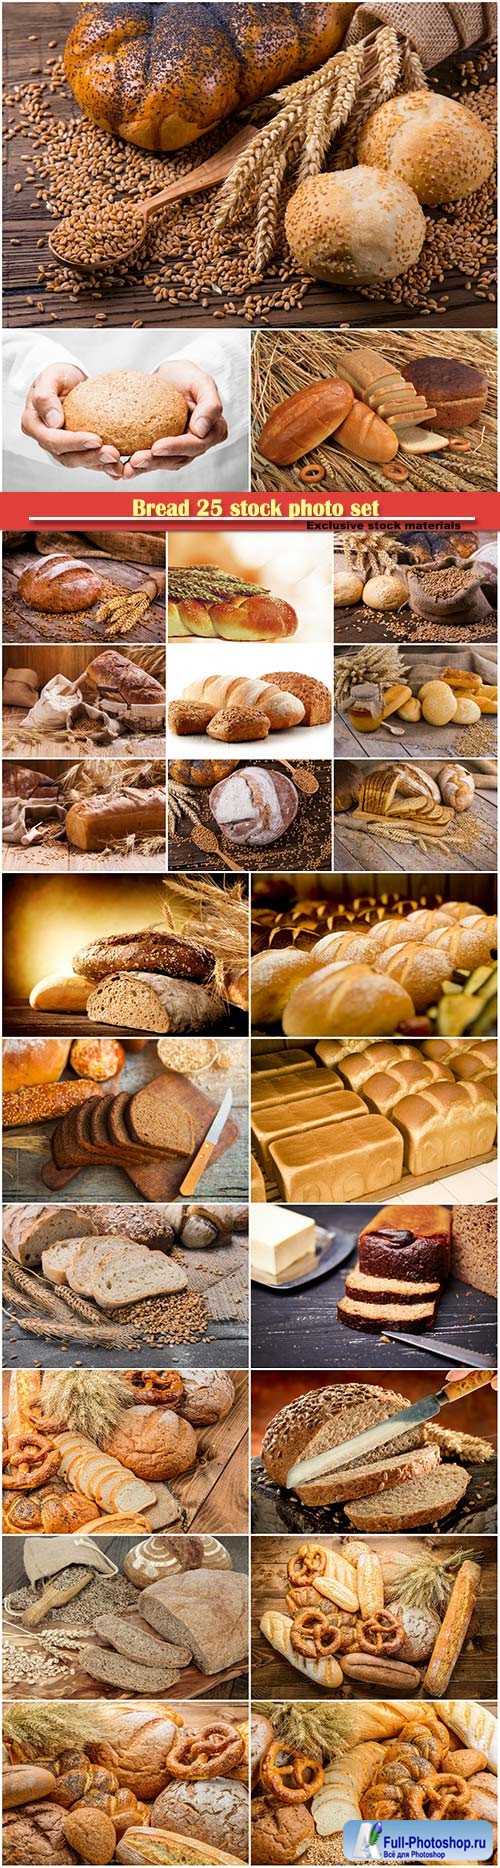 Bread 25 stock photo set